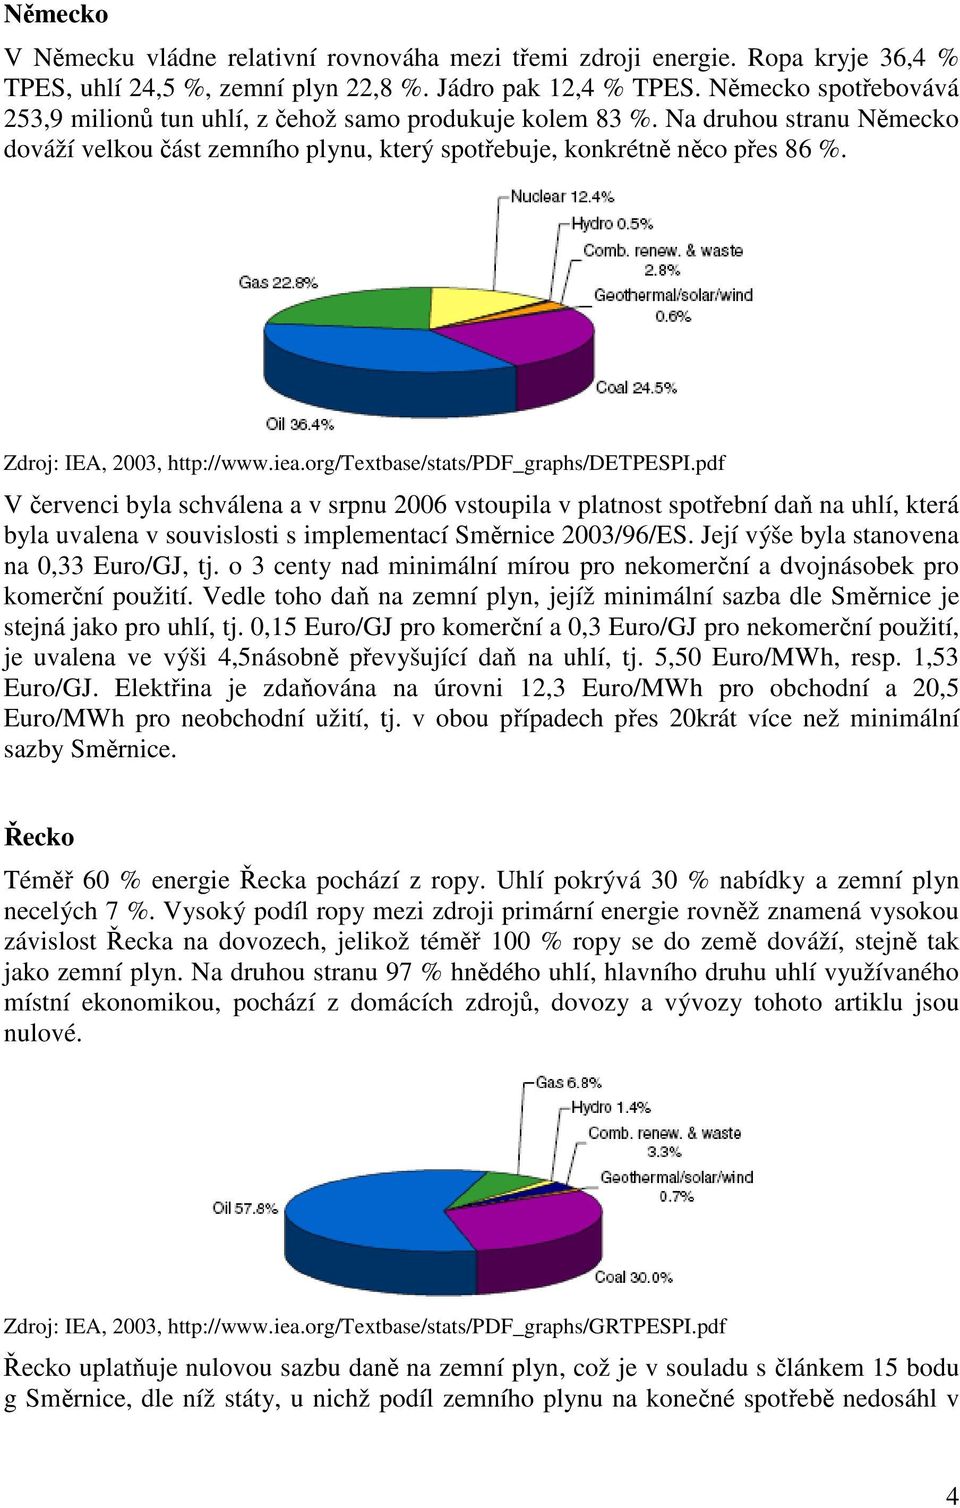 Zdroj: IEA, 2003, http://www.iea.org/textbase/stats/pdf_graphs/detpespi.